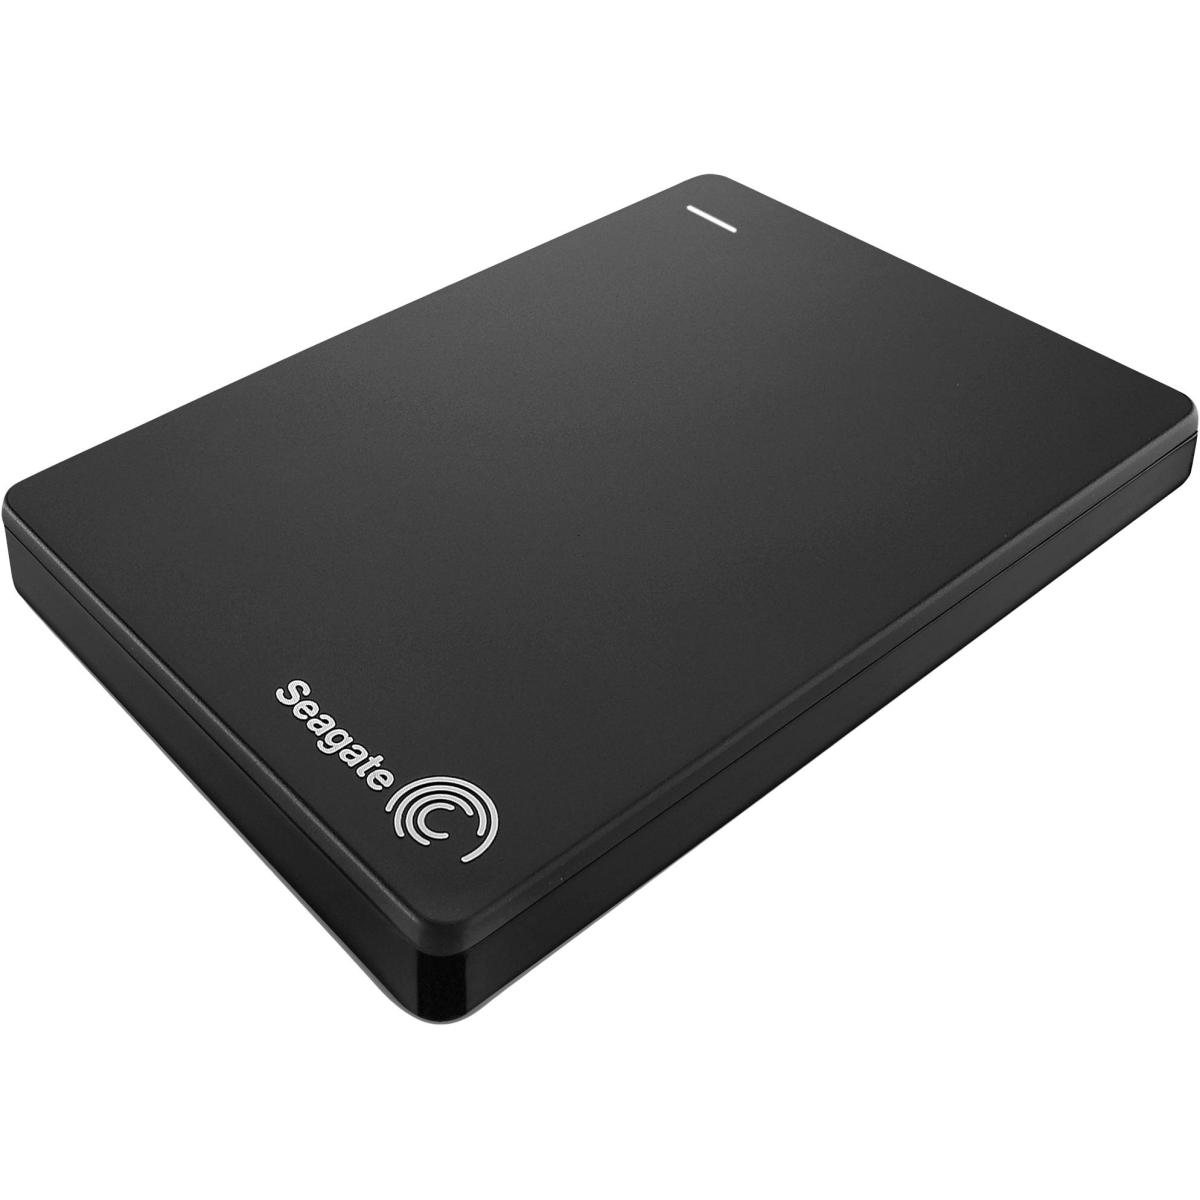 seagate backup plus slim 2tb portable external hard drive for mac usb 3.0 (stds2000100)